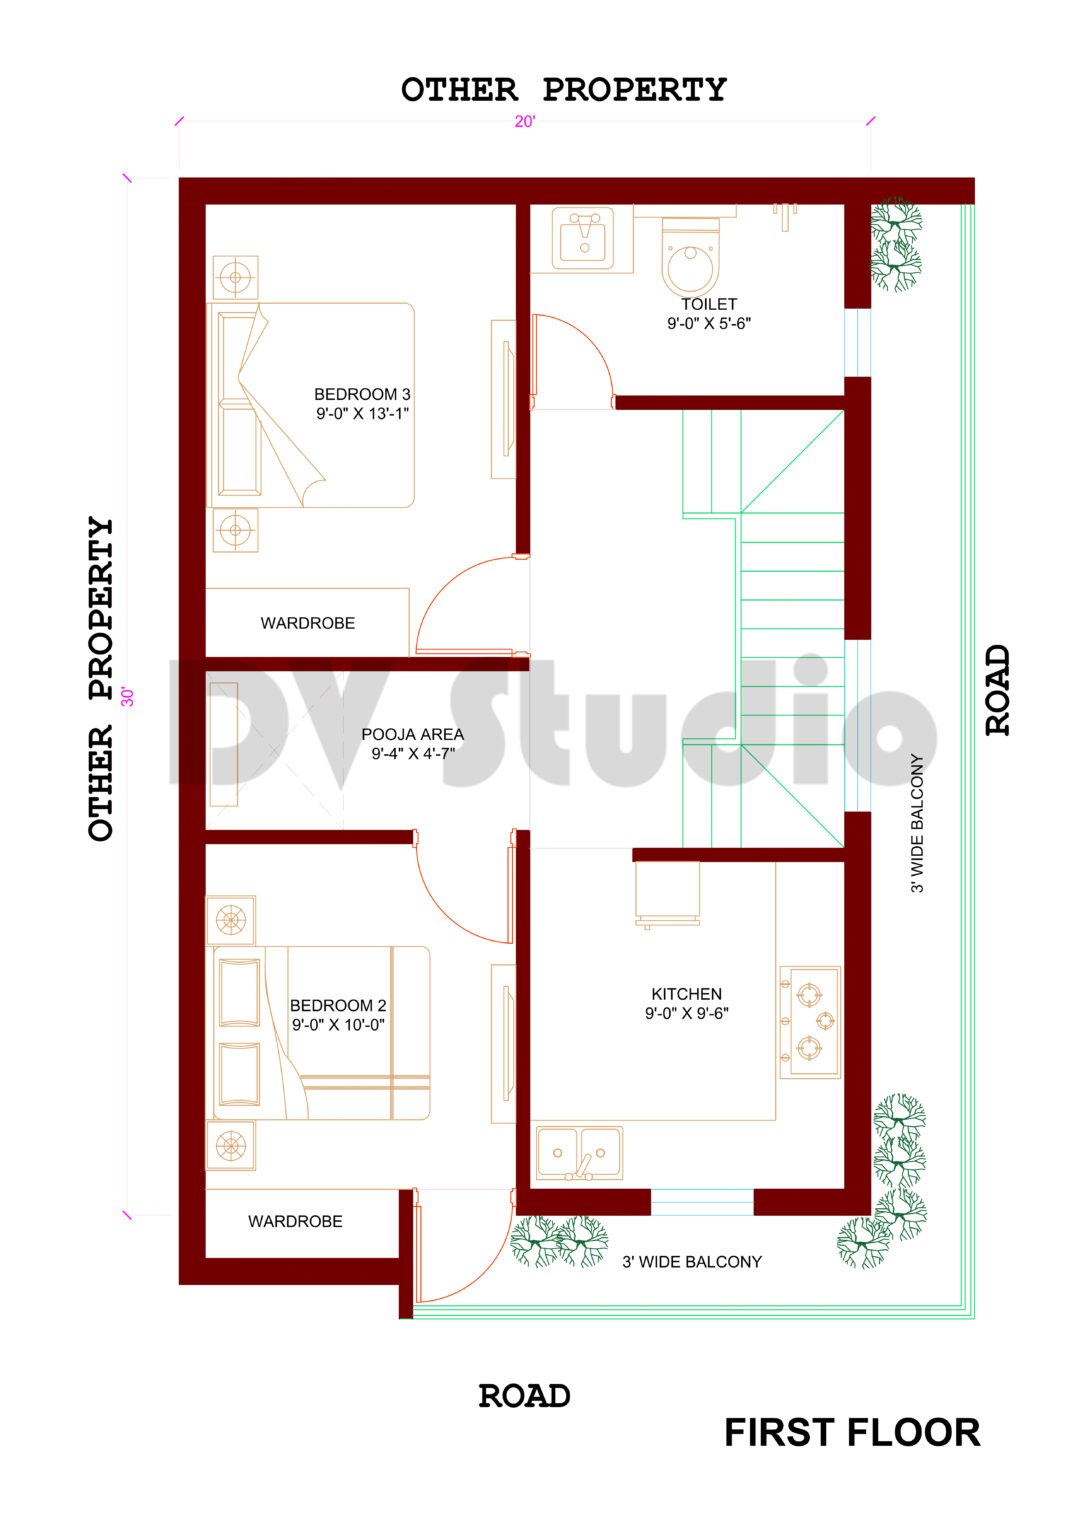 20X30 House Design Option 4 - Home Decor Ideas